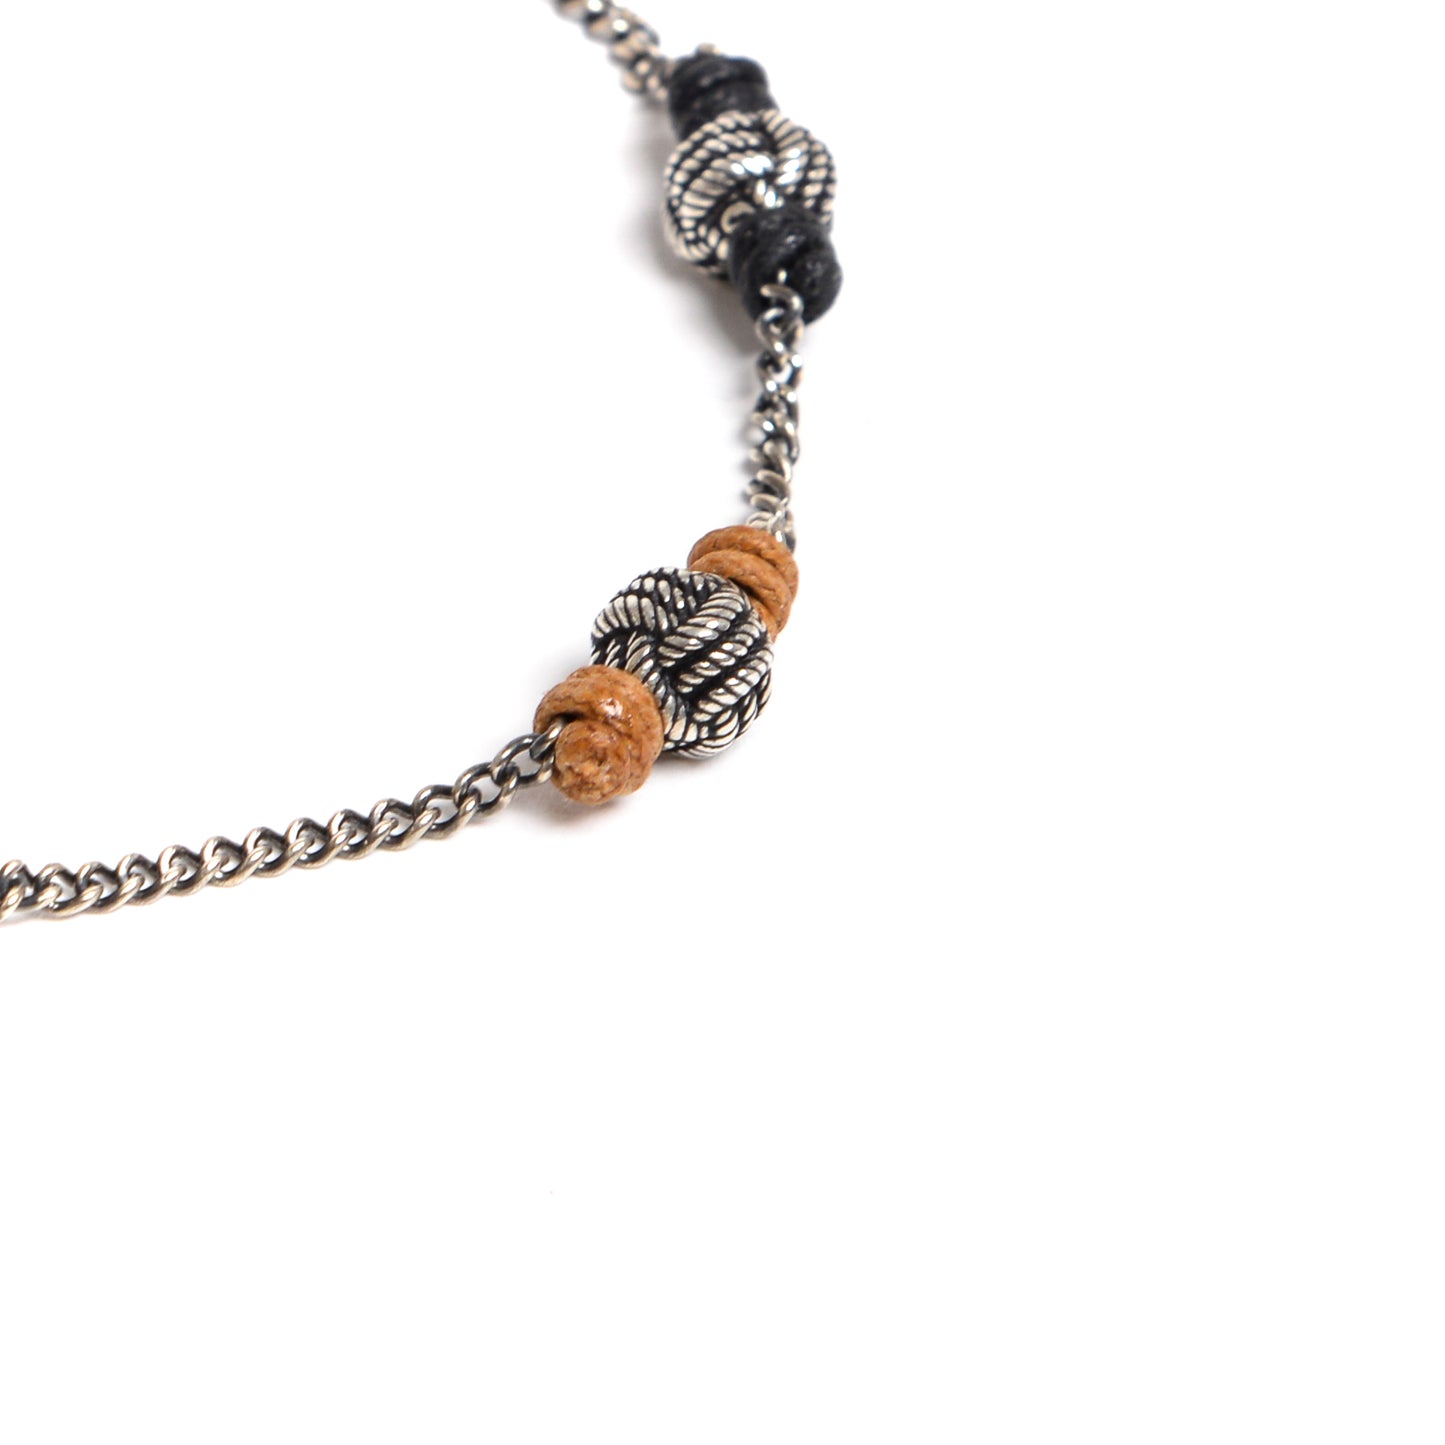 Chain Bracelet + Silver Knot Balls + Waxed Thread